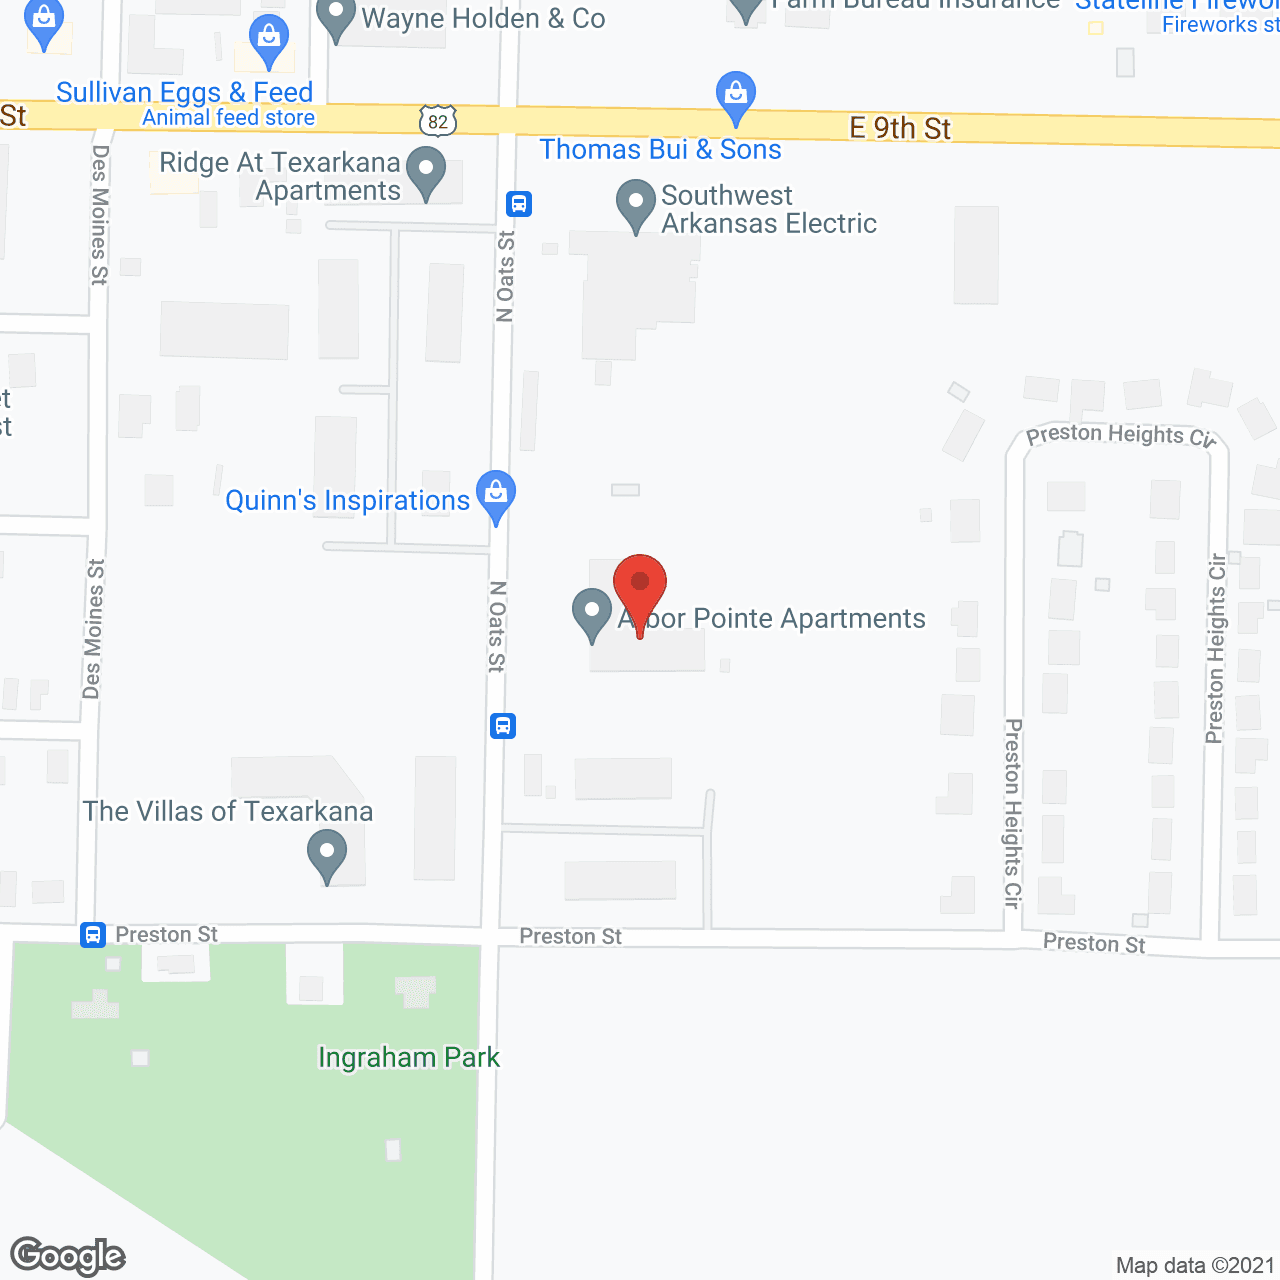 Arbor Pointe Apartments in google map